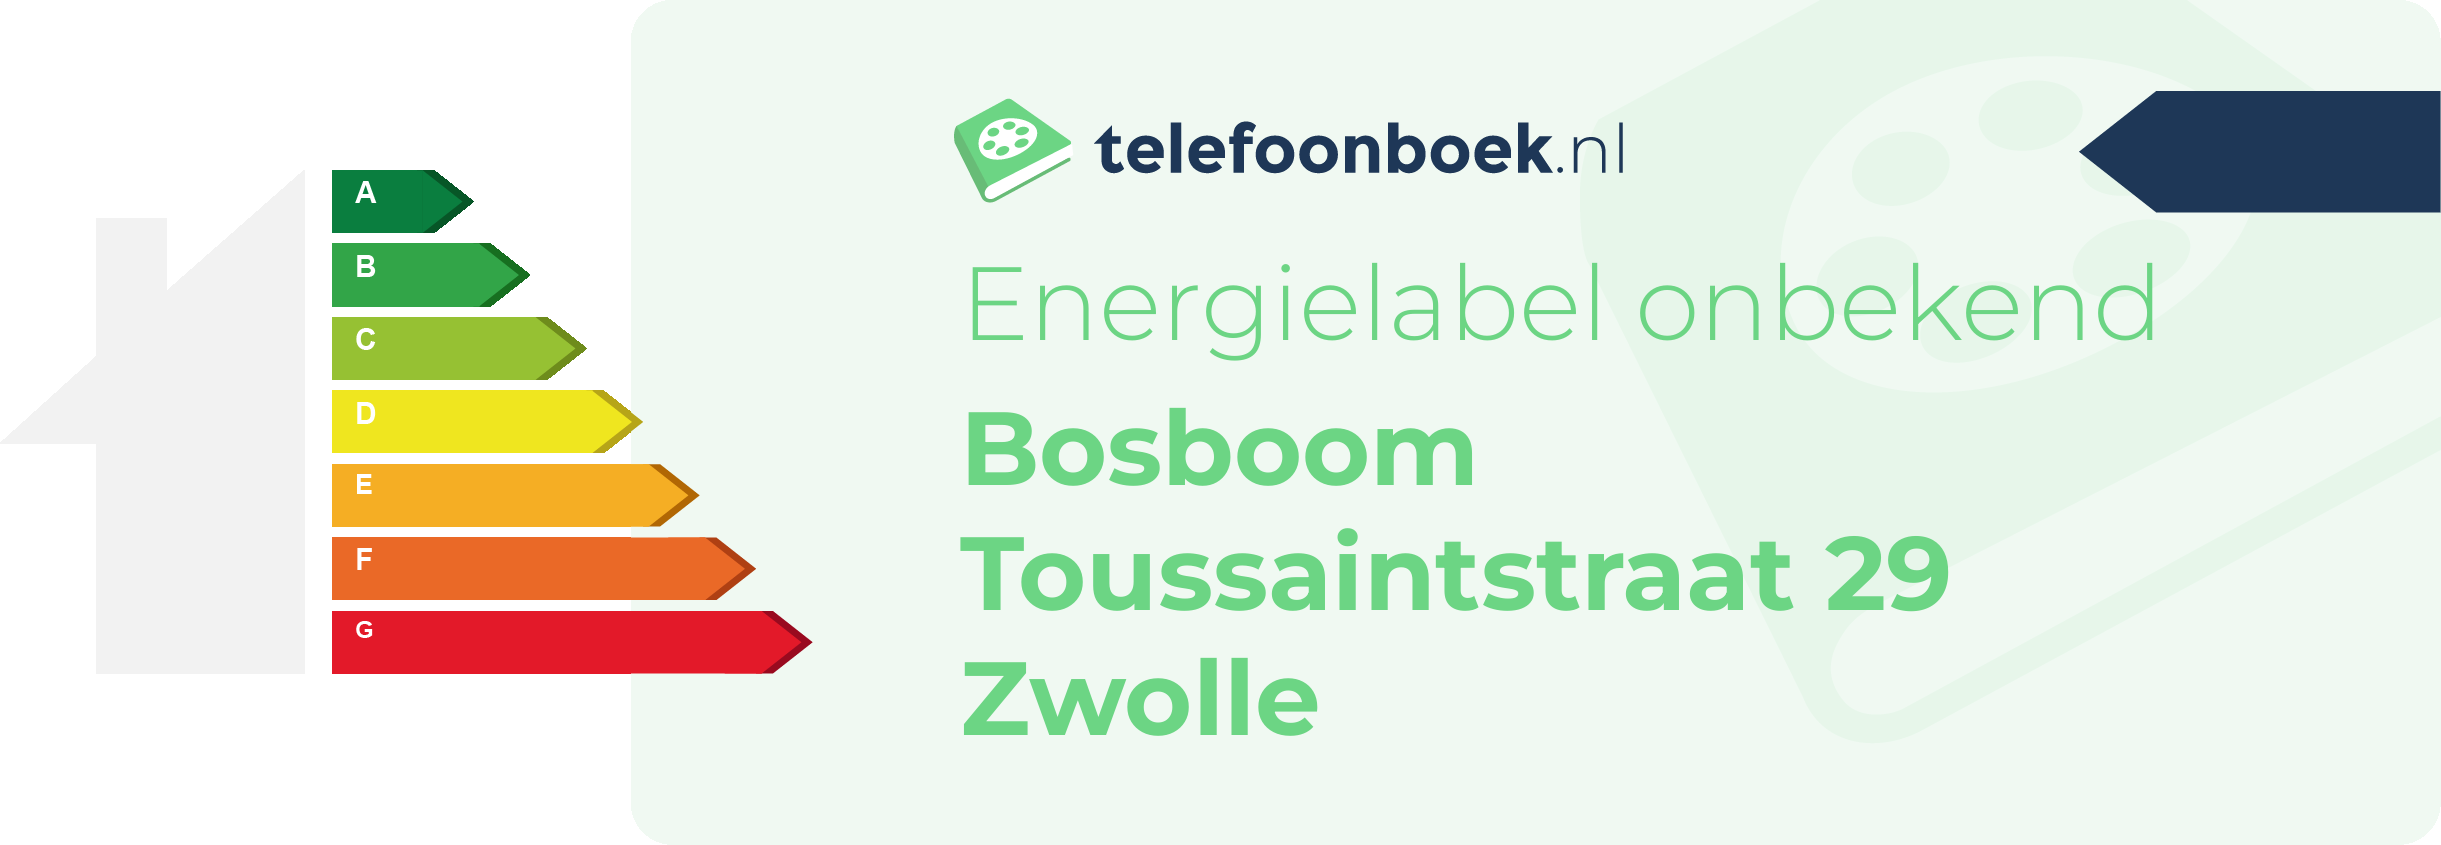 Energielabel Bosboom Toussaintstraat 29 Zwolle